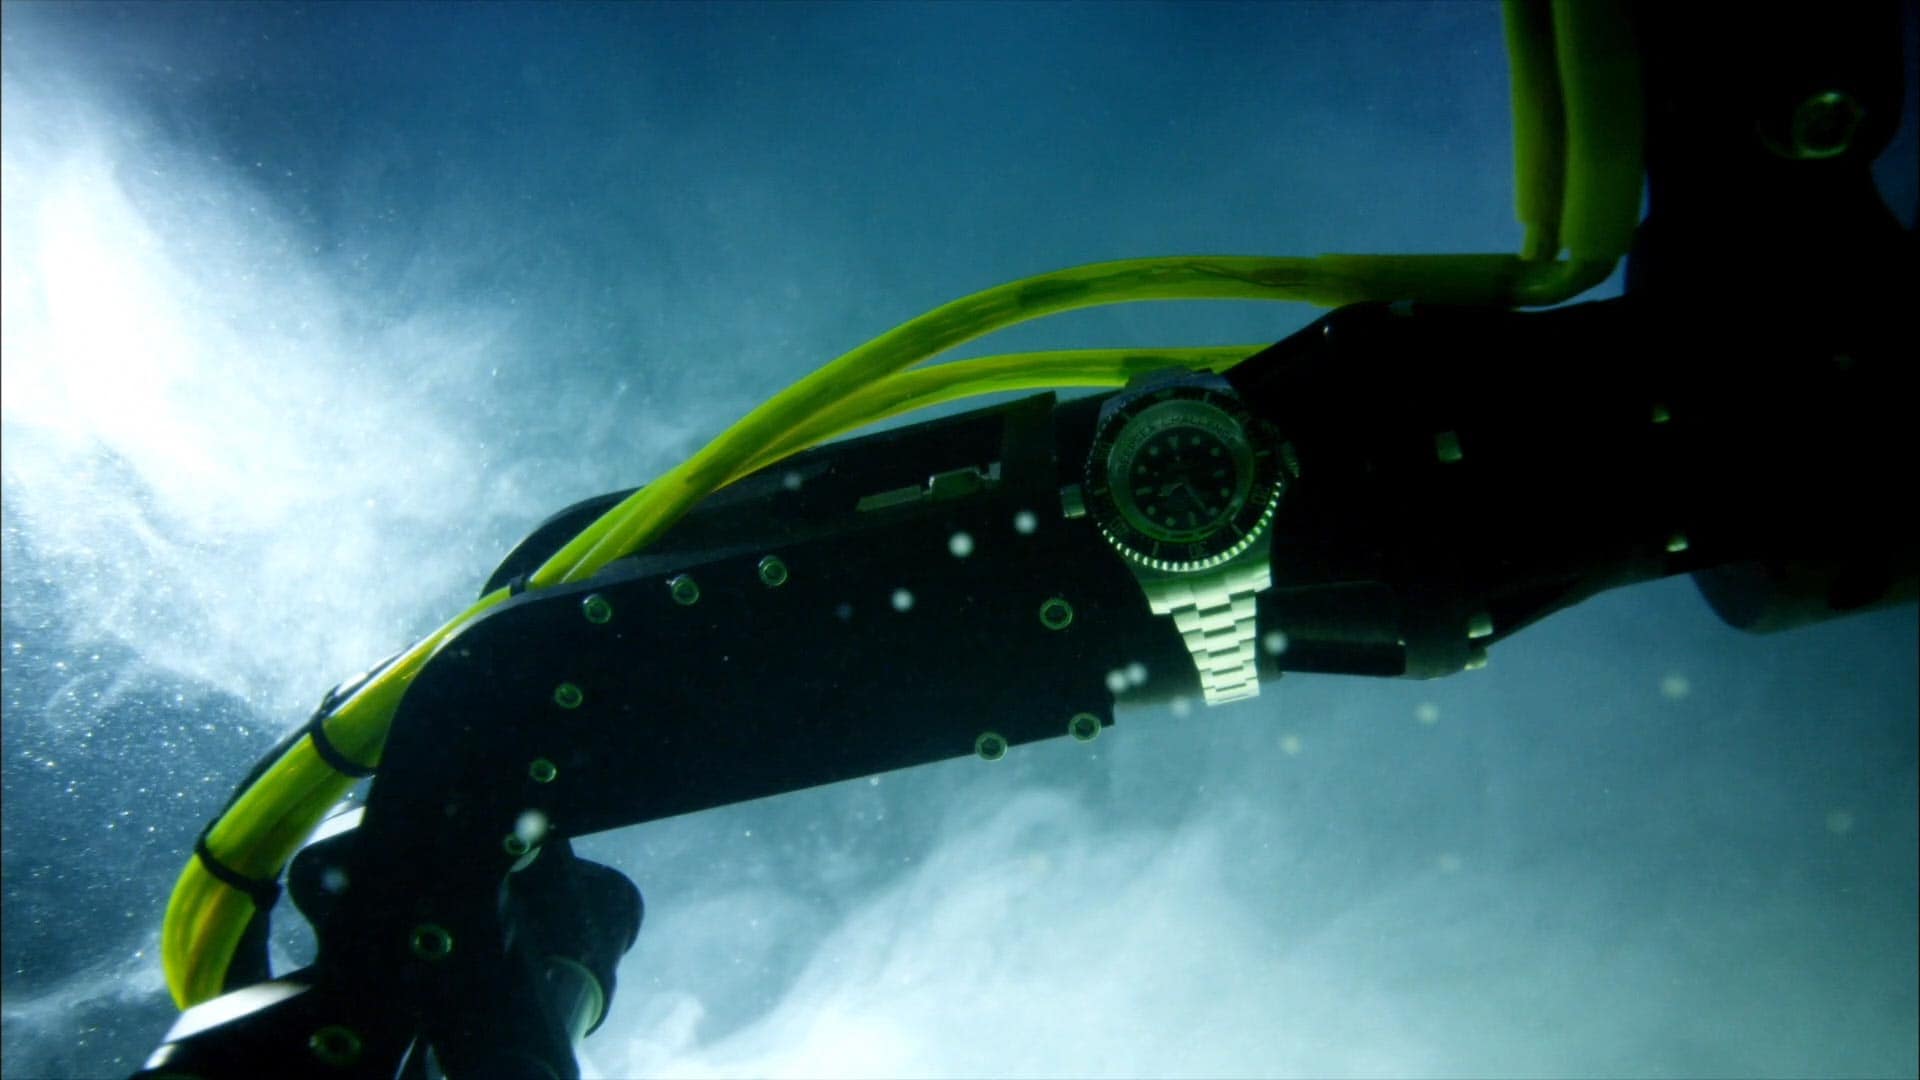 rolex deepsea challenge watch